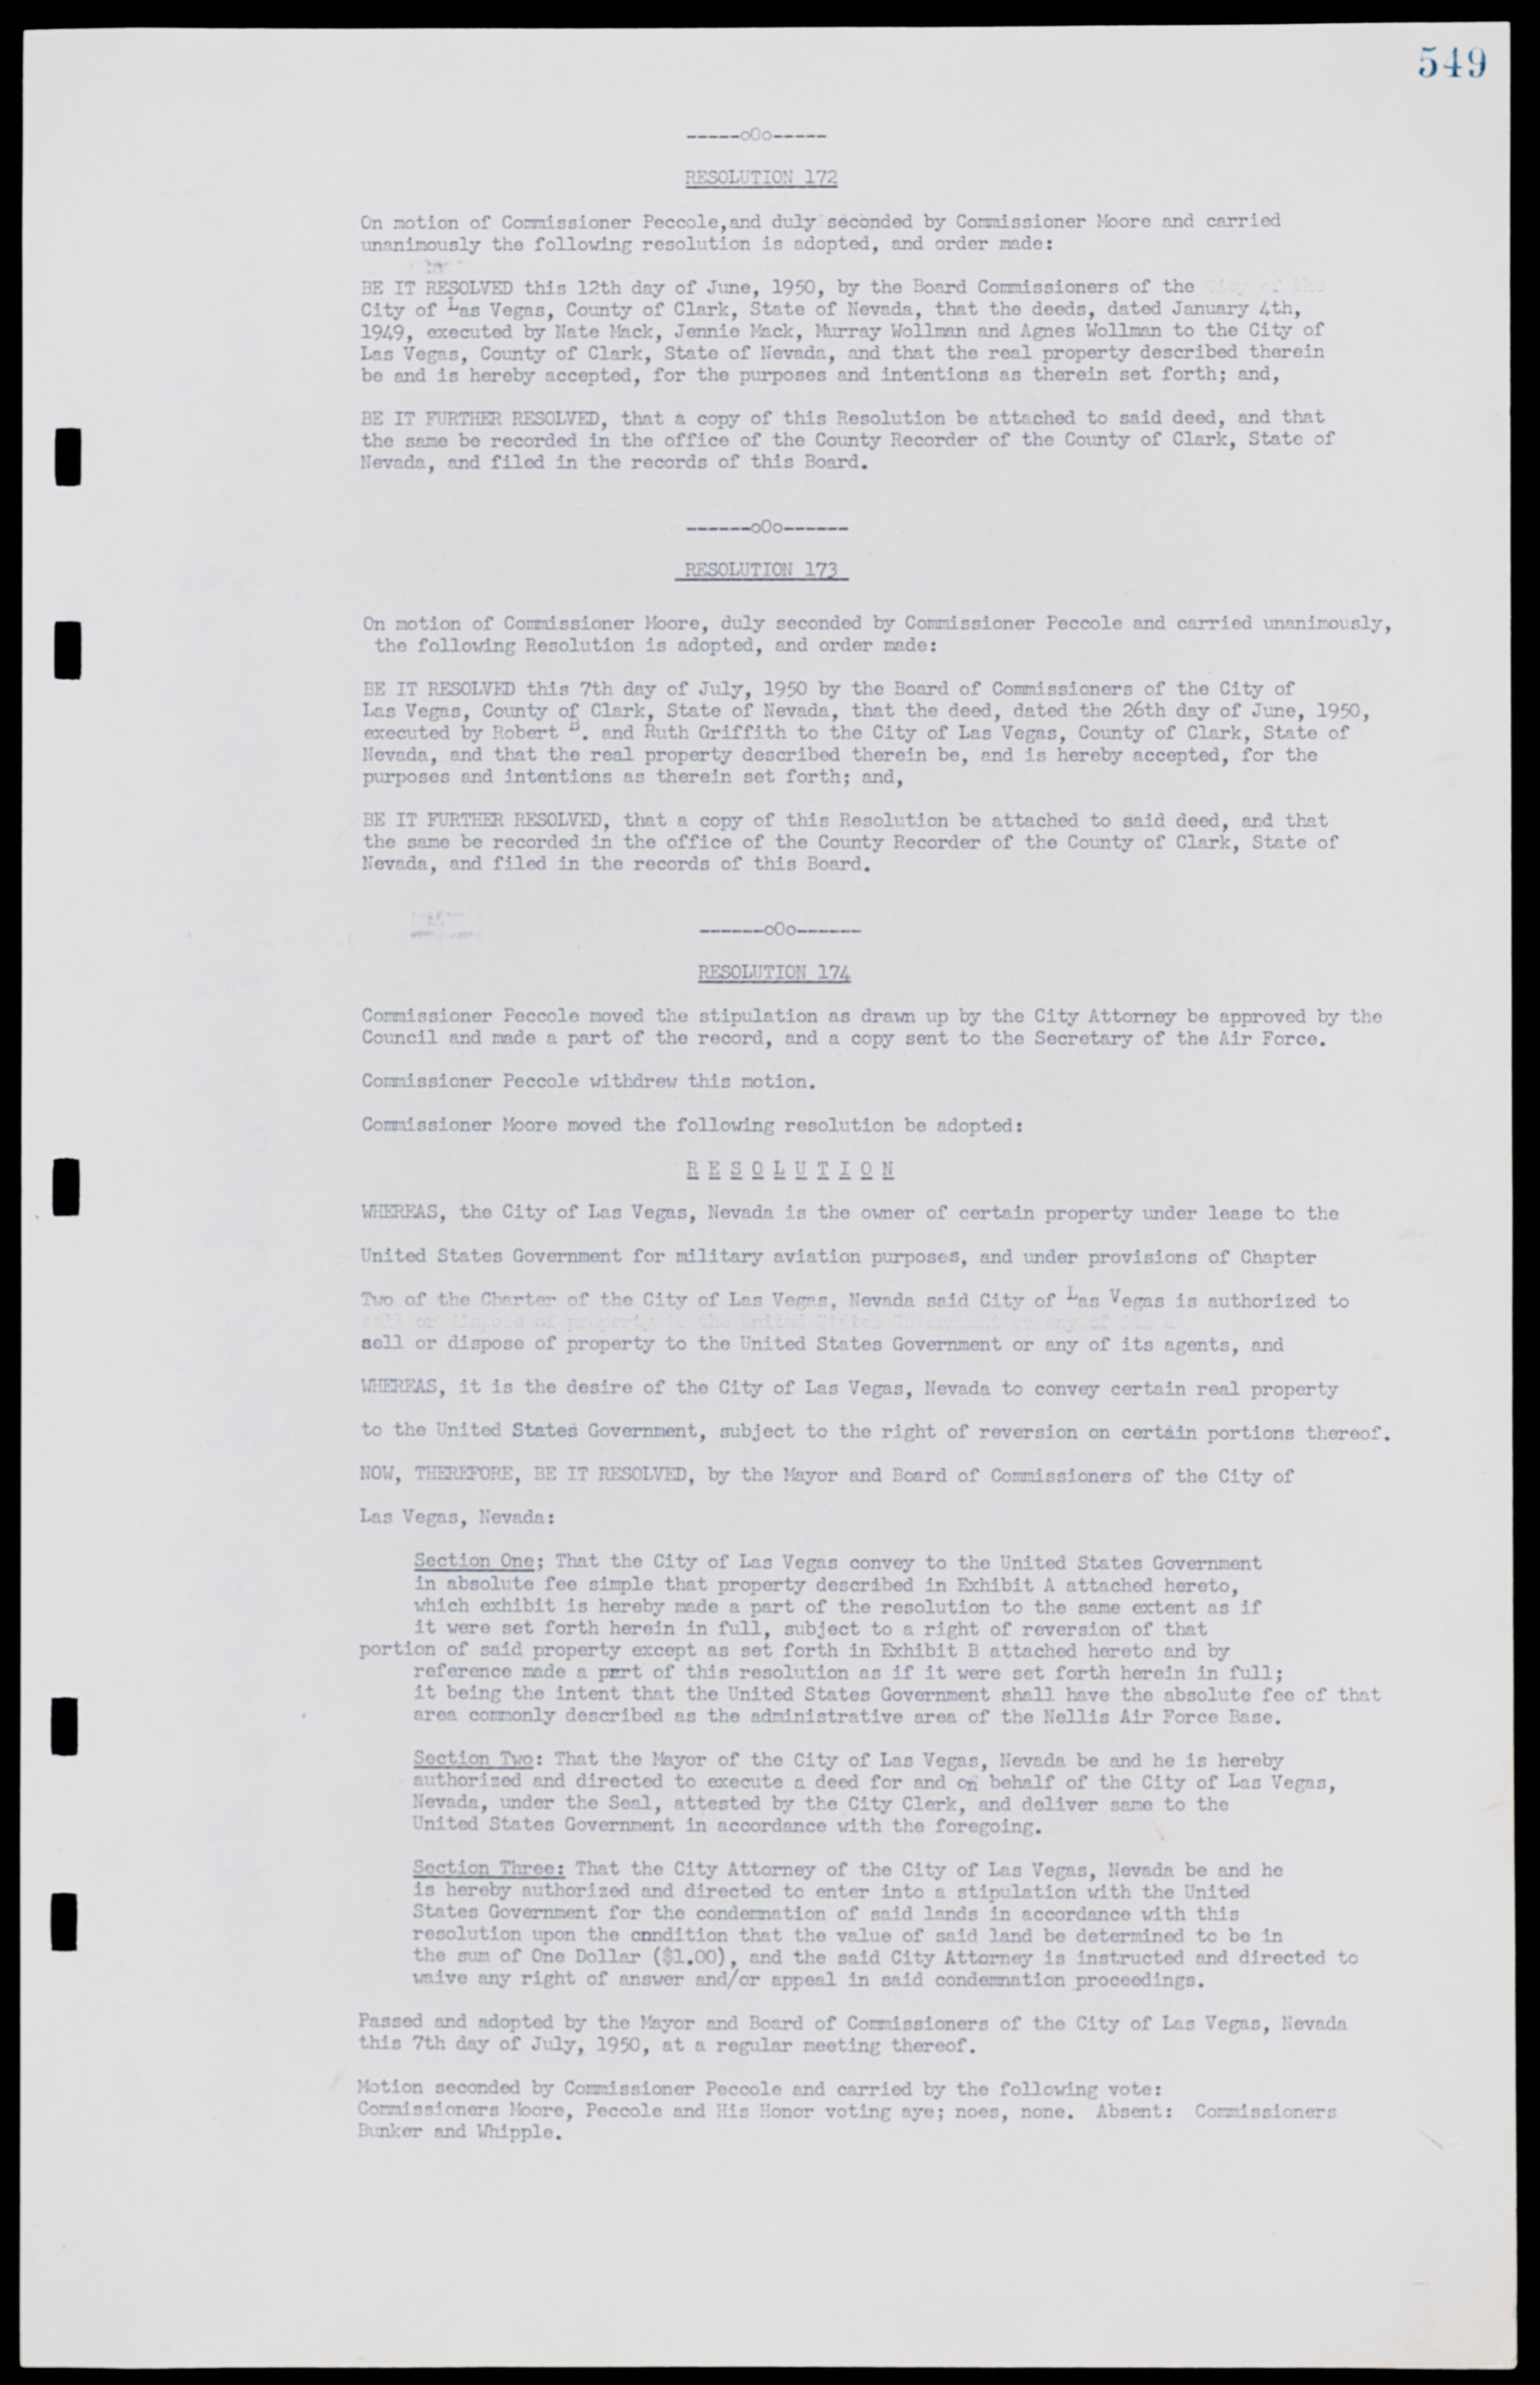 Las Vegas City Commission Minutes, January 7, 1947 to October 26, 1949, lvc000006-579